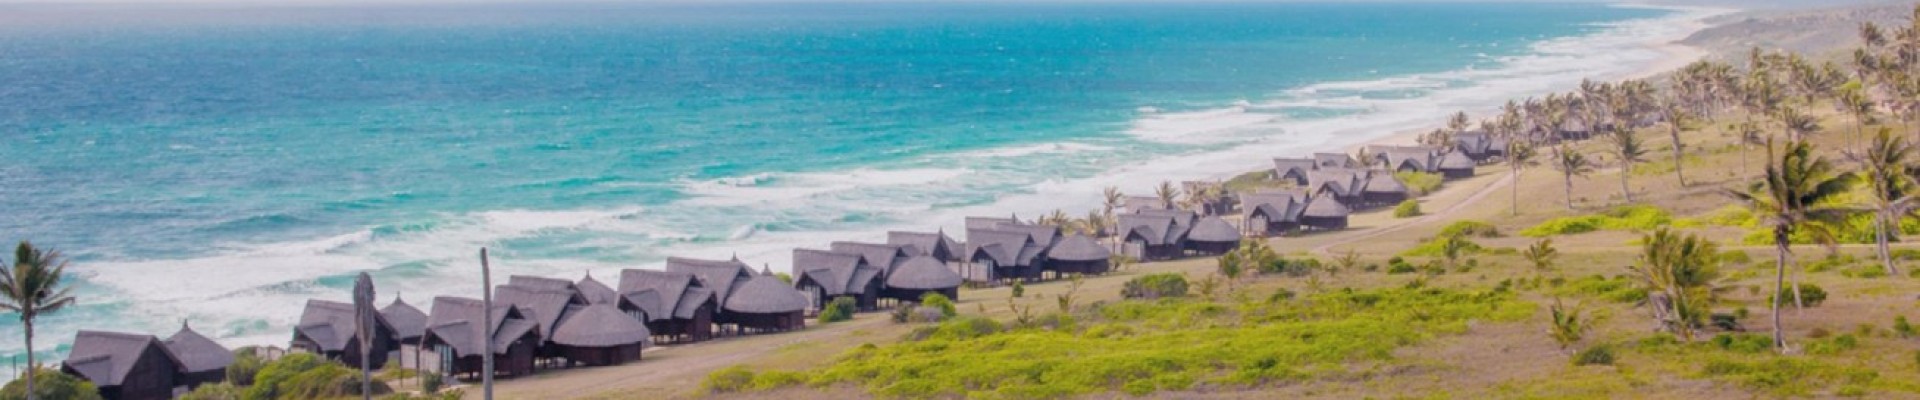 4* Massinga Beach Lodge - Mozambique Package (4 nights)